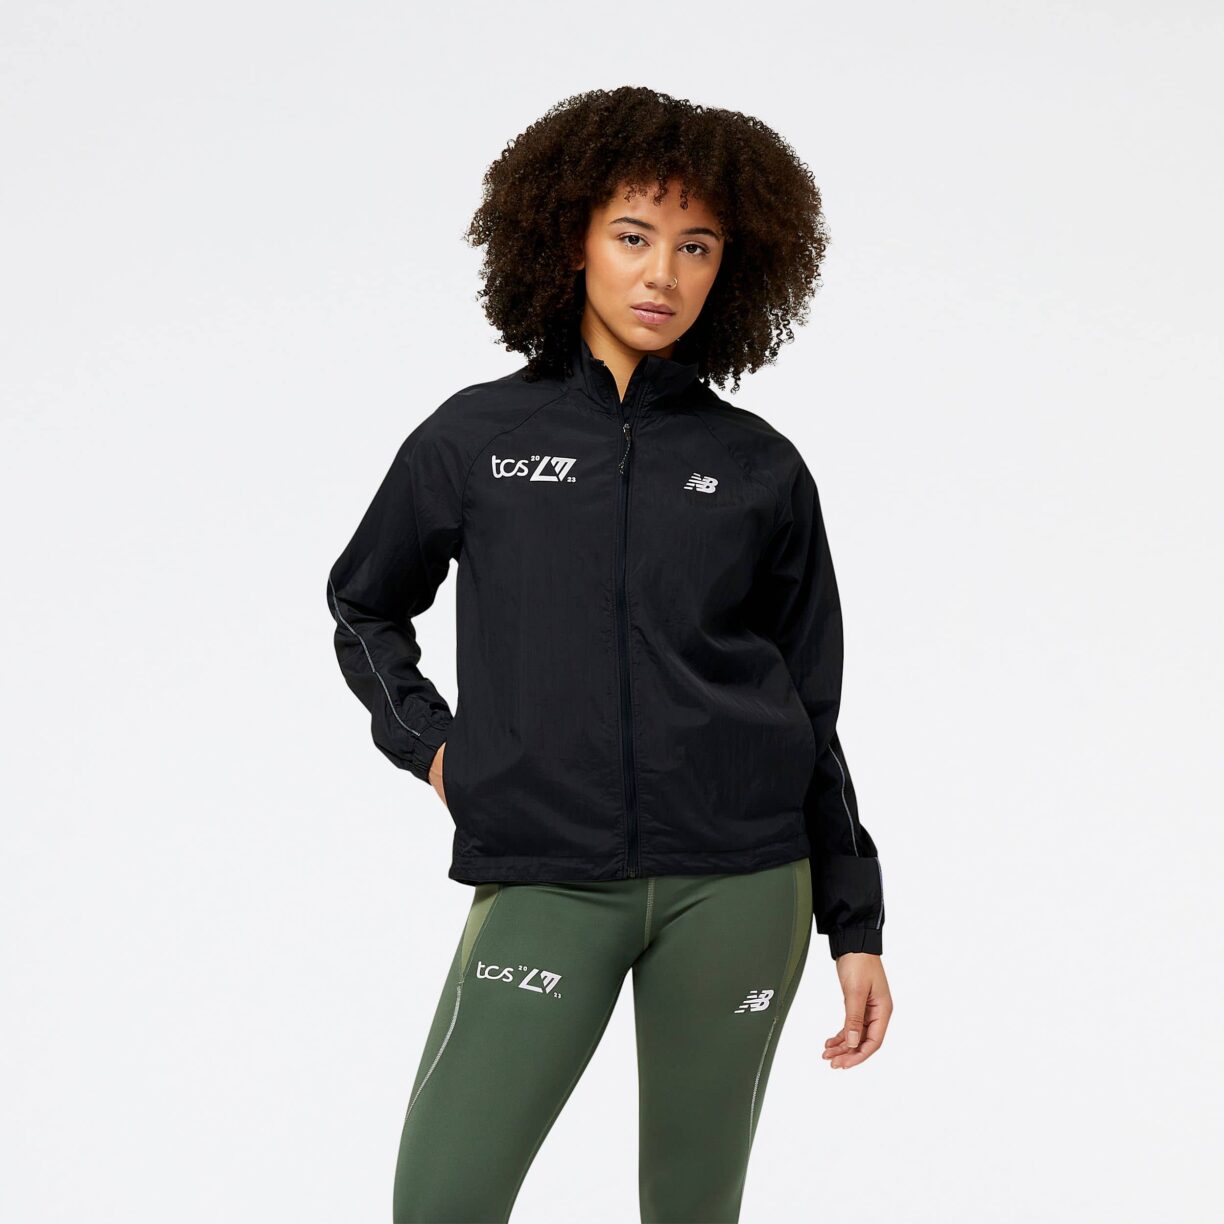 Nb womens london edition impact run packable jacket black 85 newbalance. Co. Uk